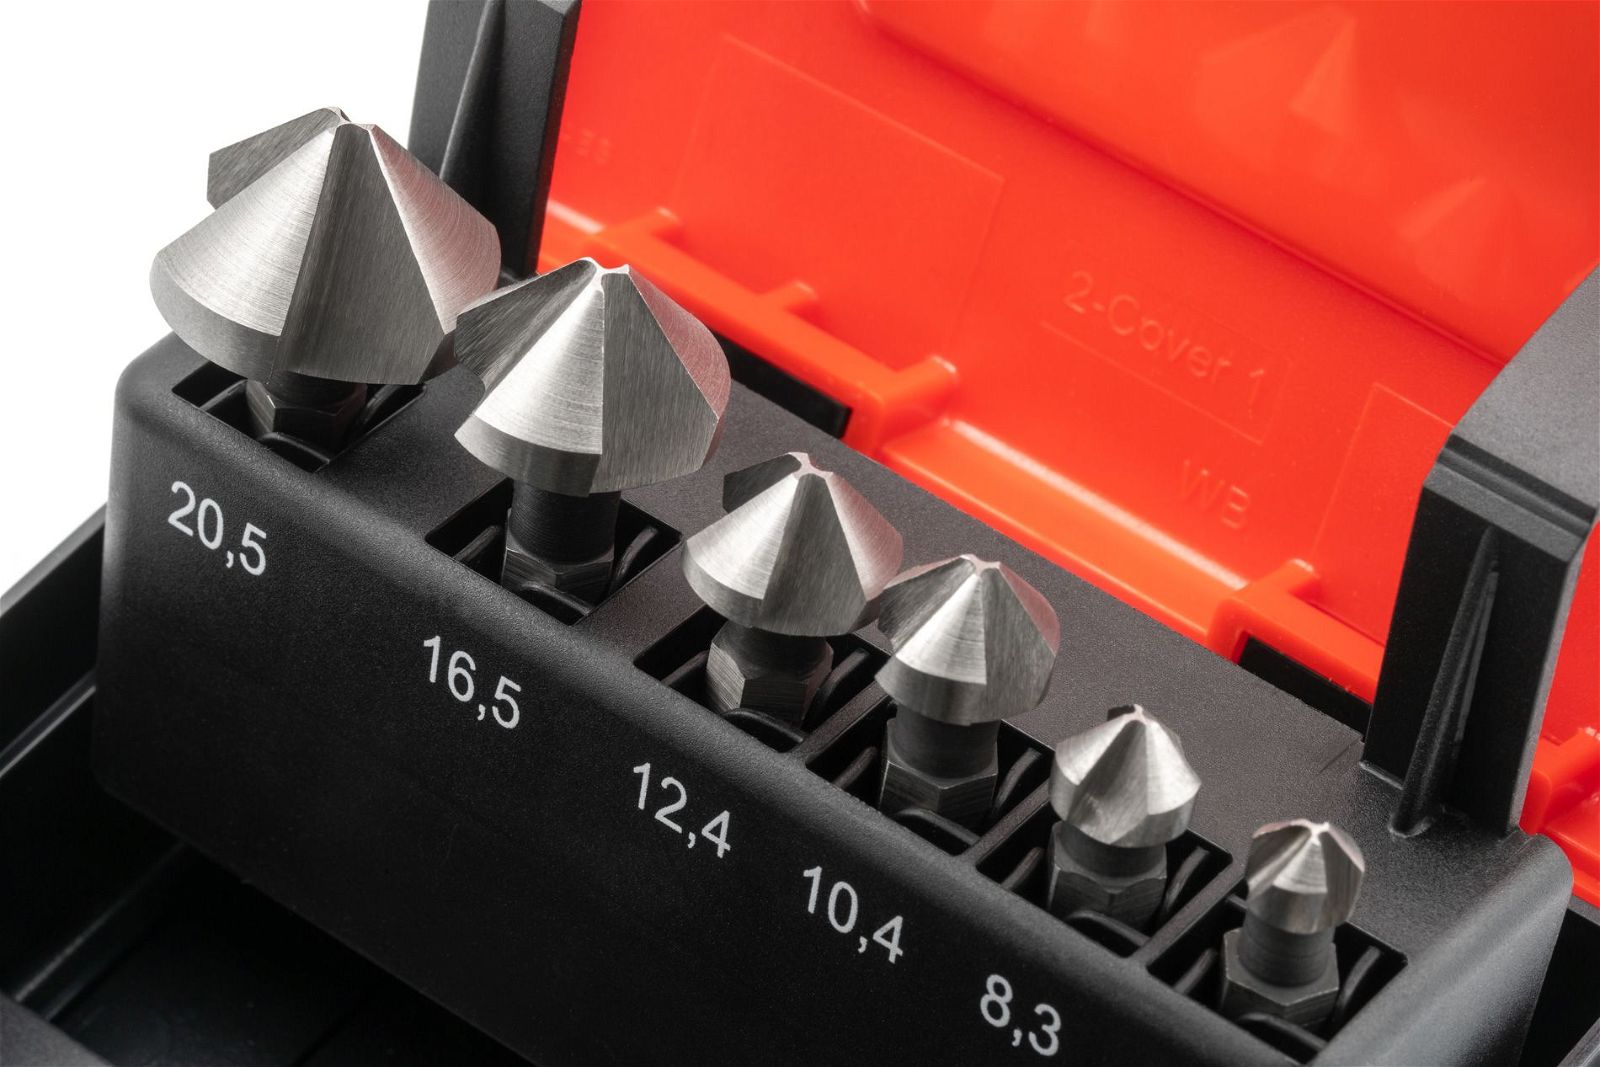 HSSG 90° bit Countersink Set 6.3 - 20.5 mm - for cordless screwdriver